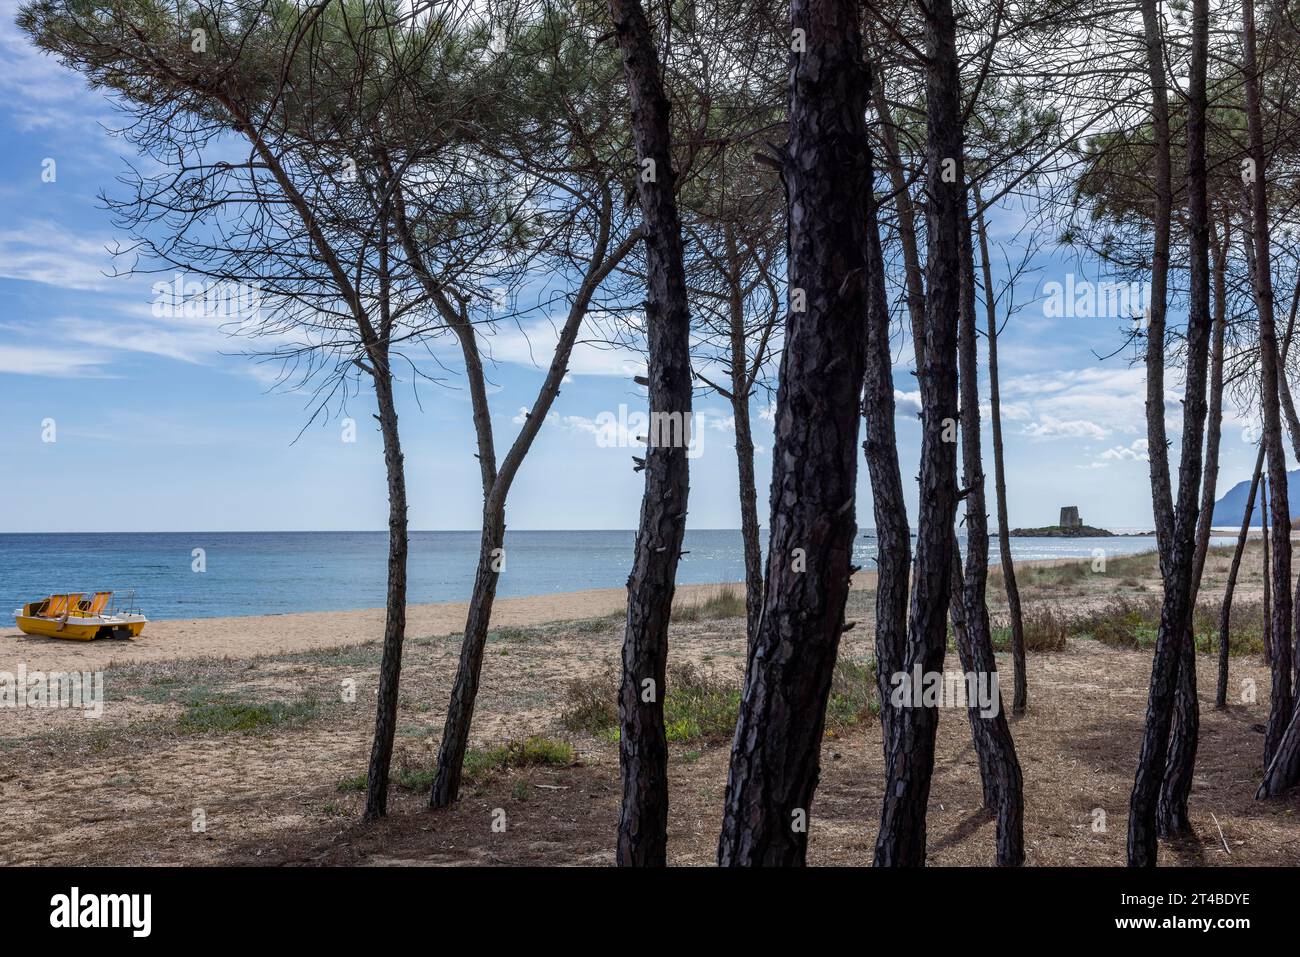 Pine grove on the beach with a yellow tretoot and in the distance the tower Torre Di Bari Sardo, Bari Sardo, Ogliastra, Sardinia, Italy Stock Photo